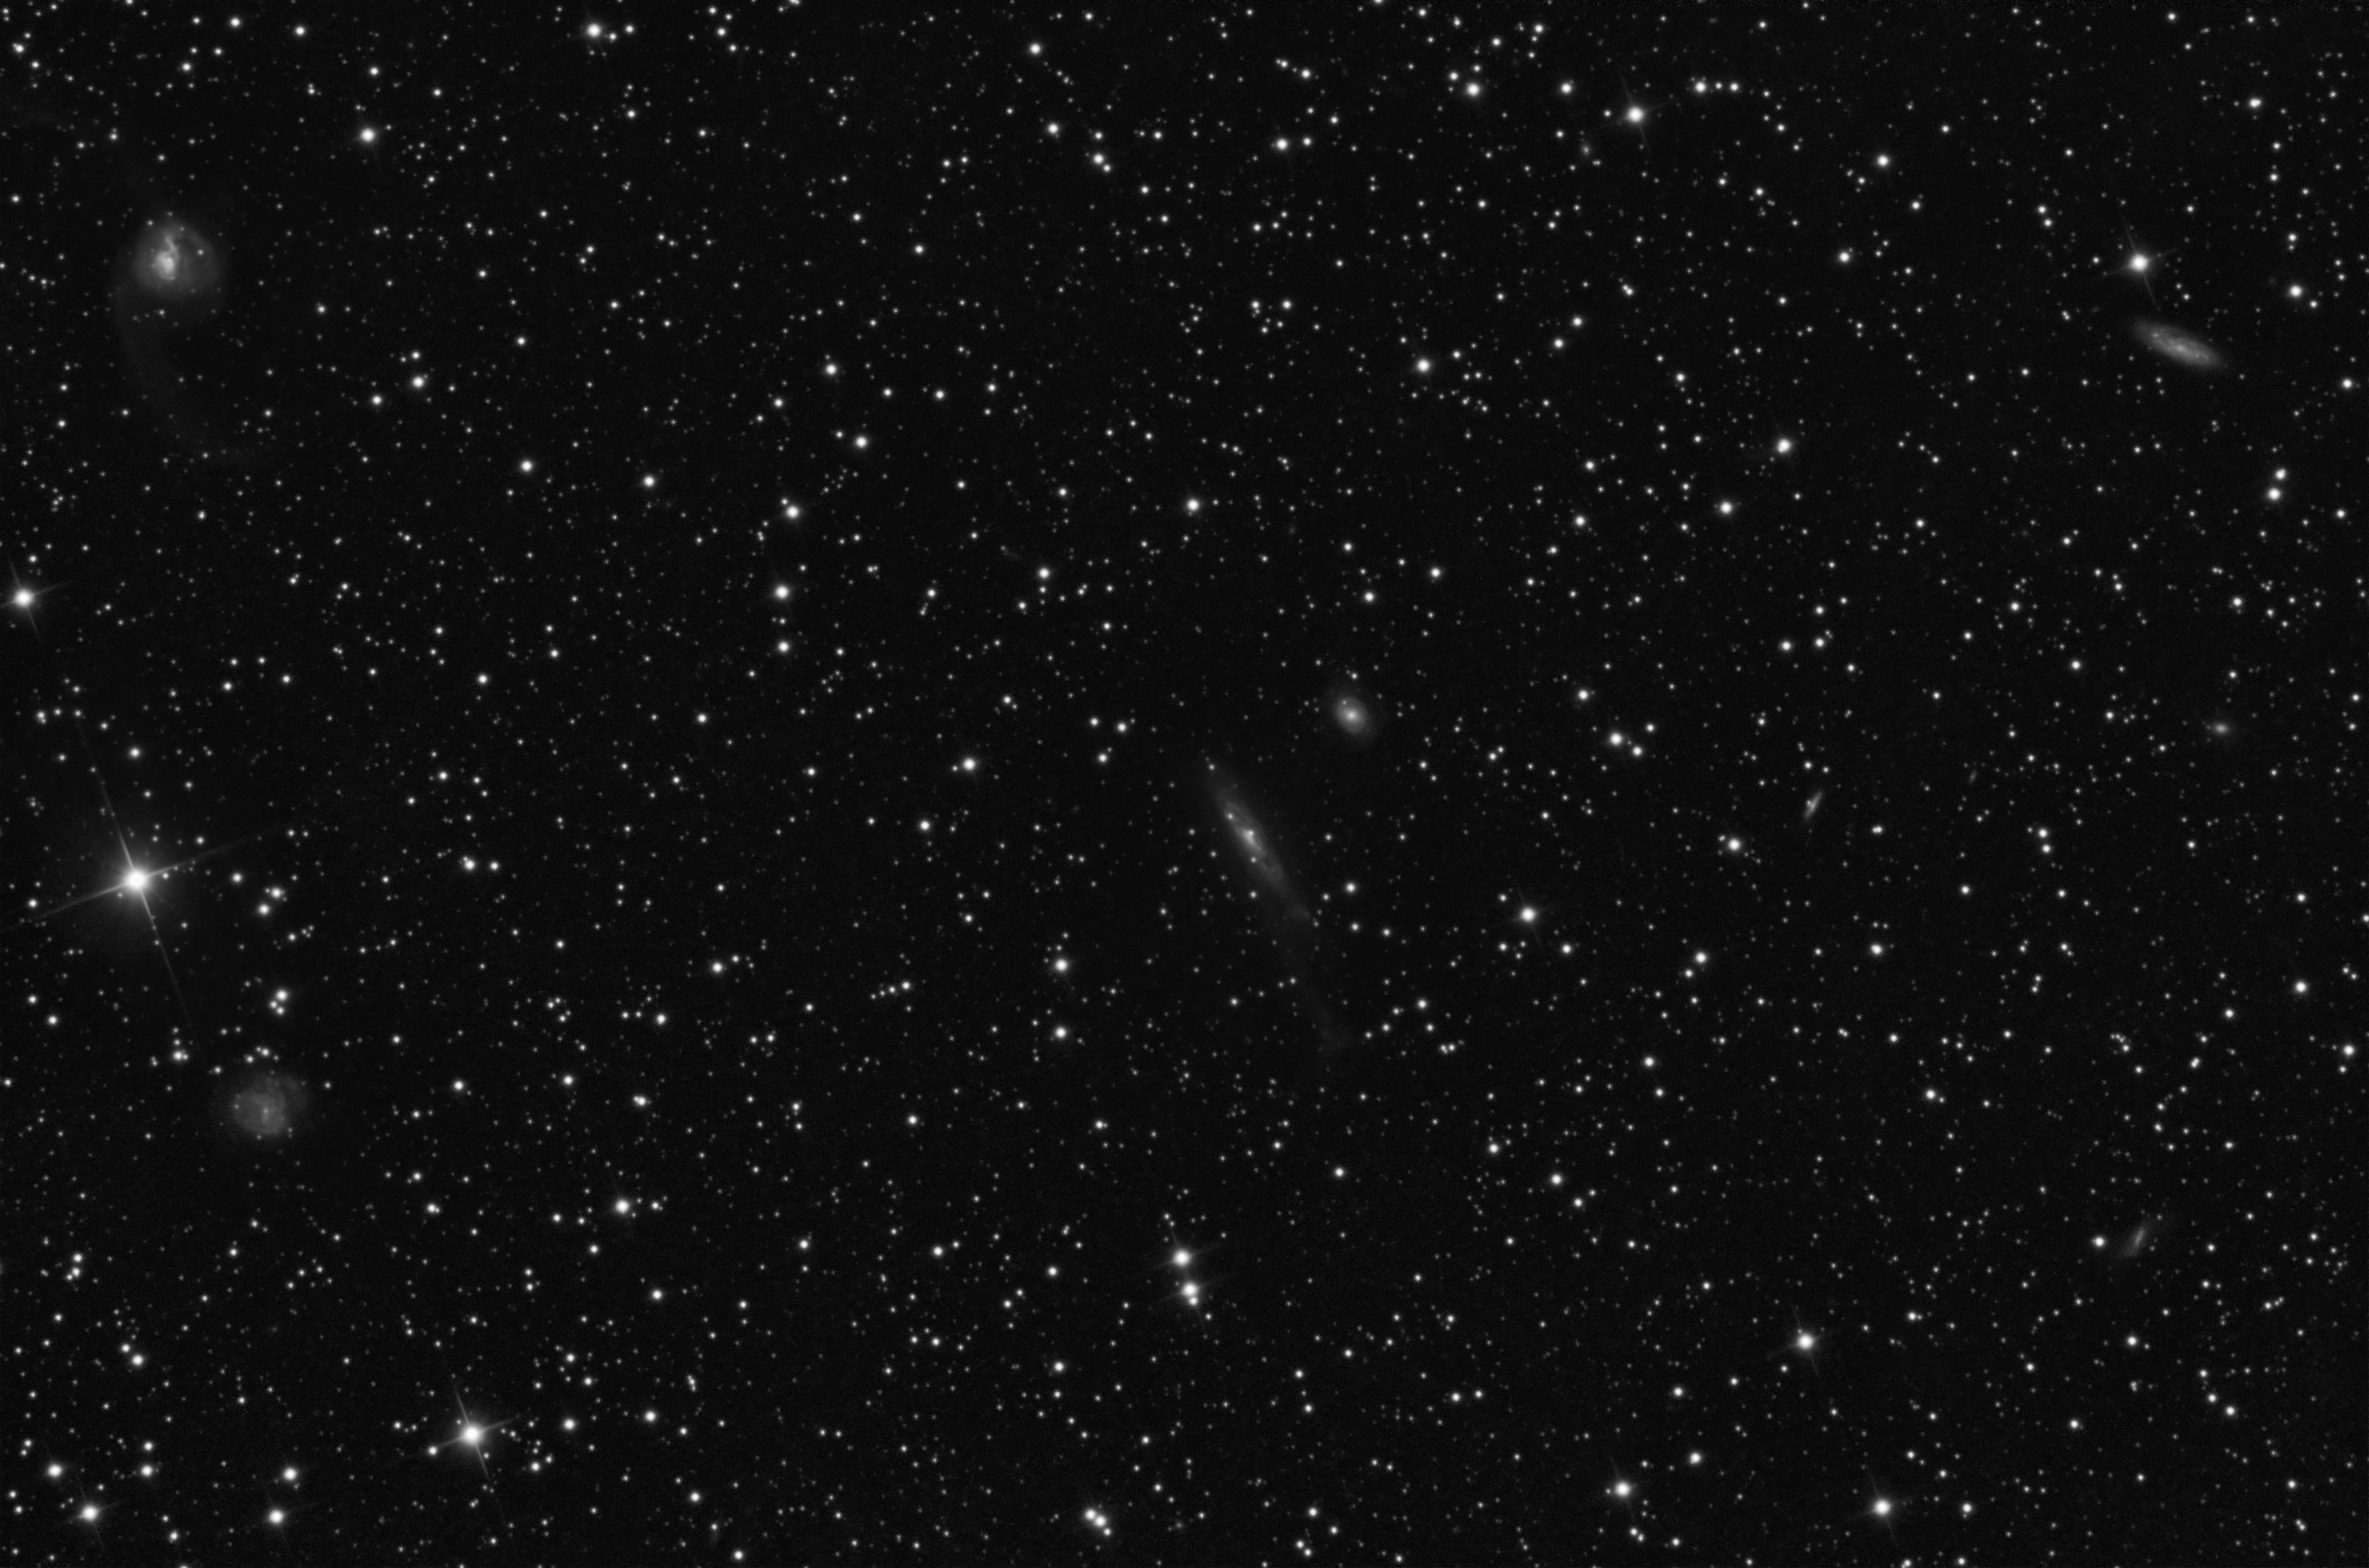 Test image around NGC 3263